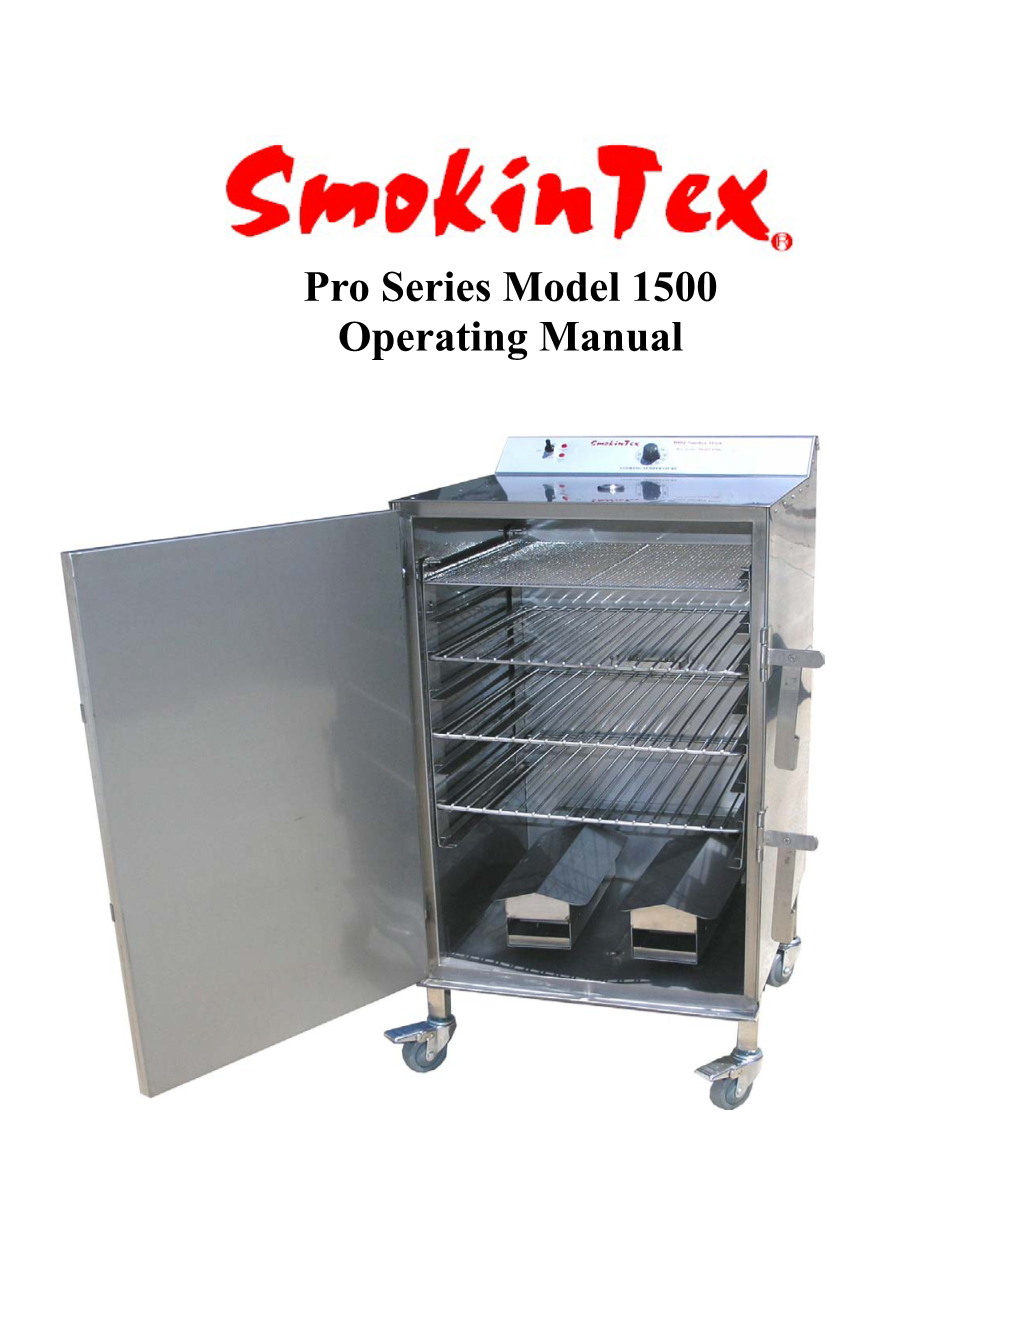 Pro Series Model 1500 Operating Manual Smokintex®